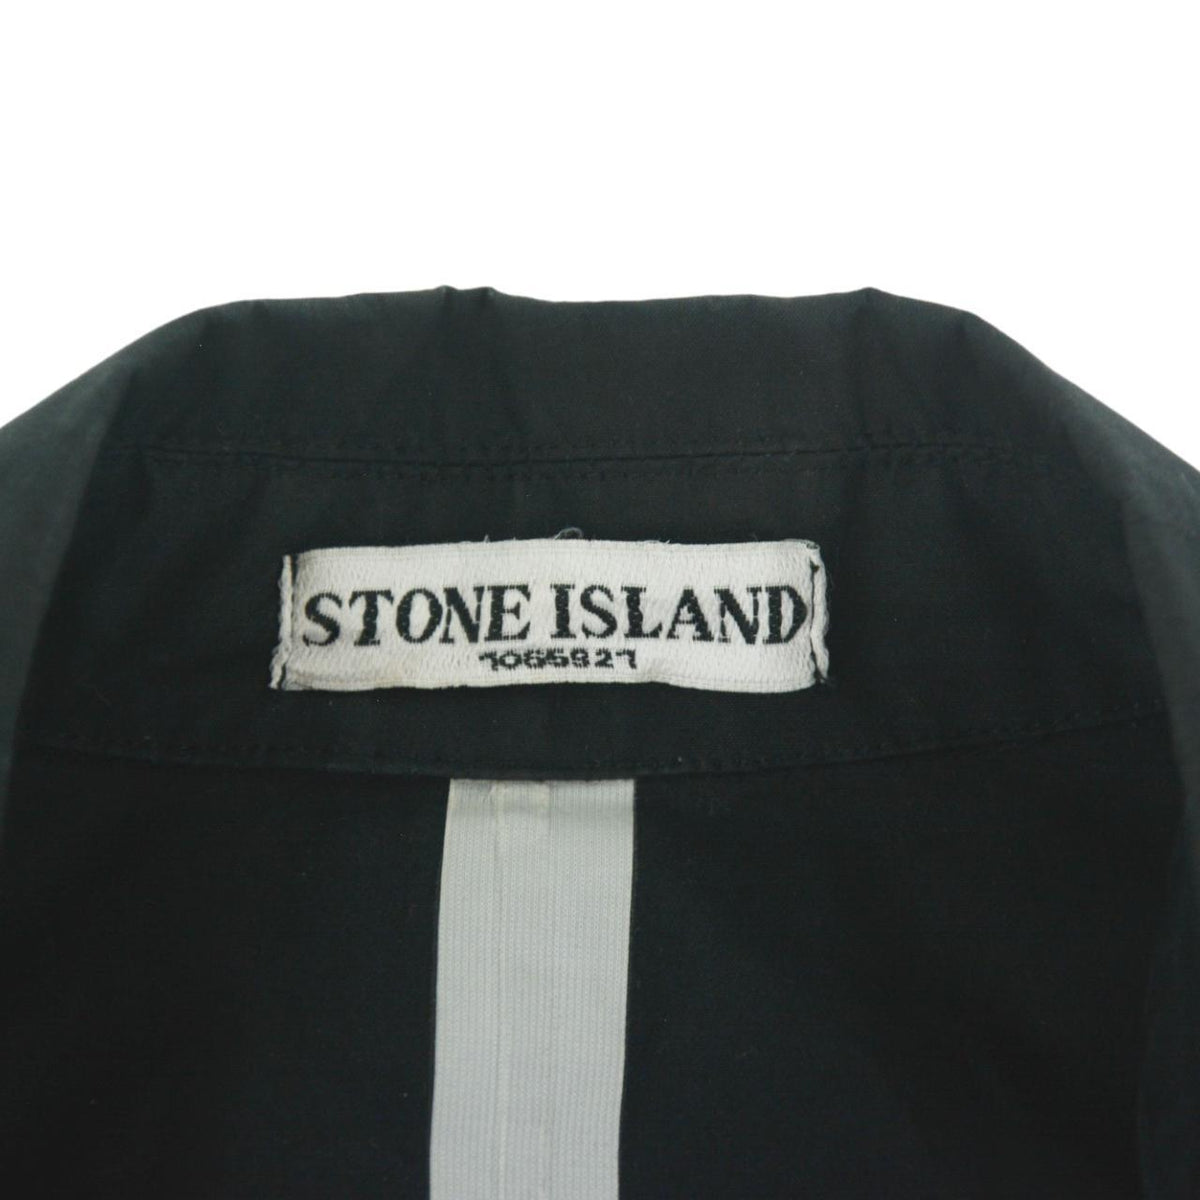 Vintage Stone Island Ventile Jacket Size S